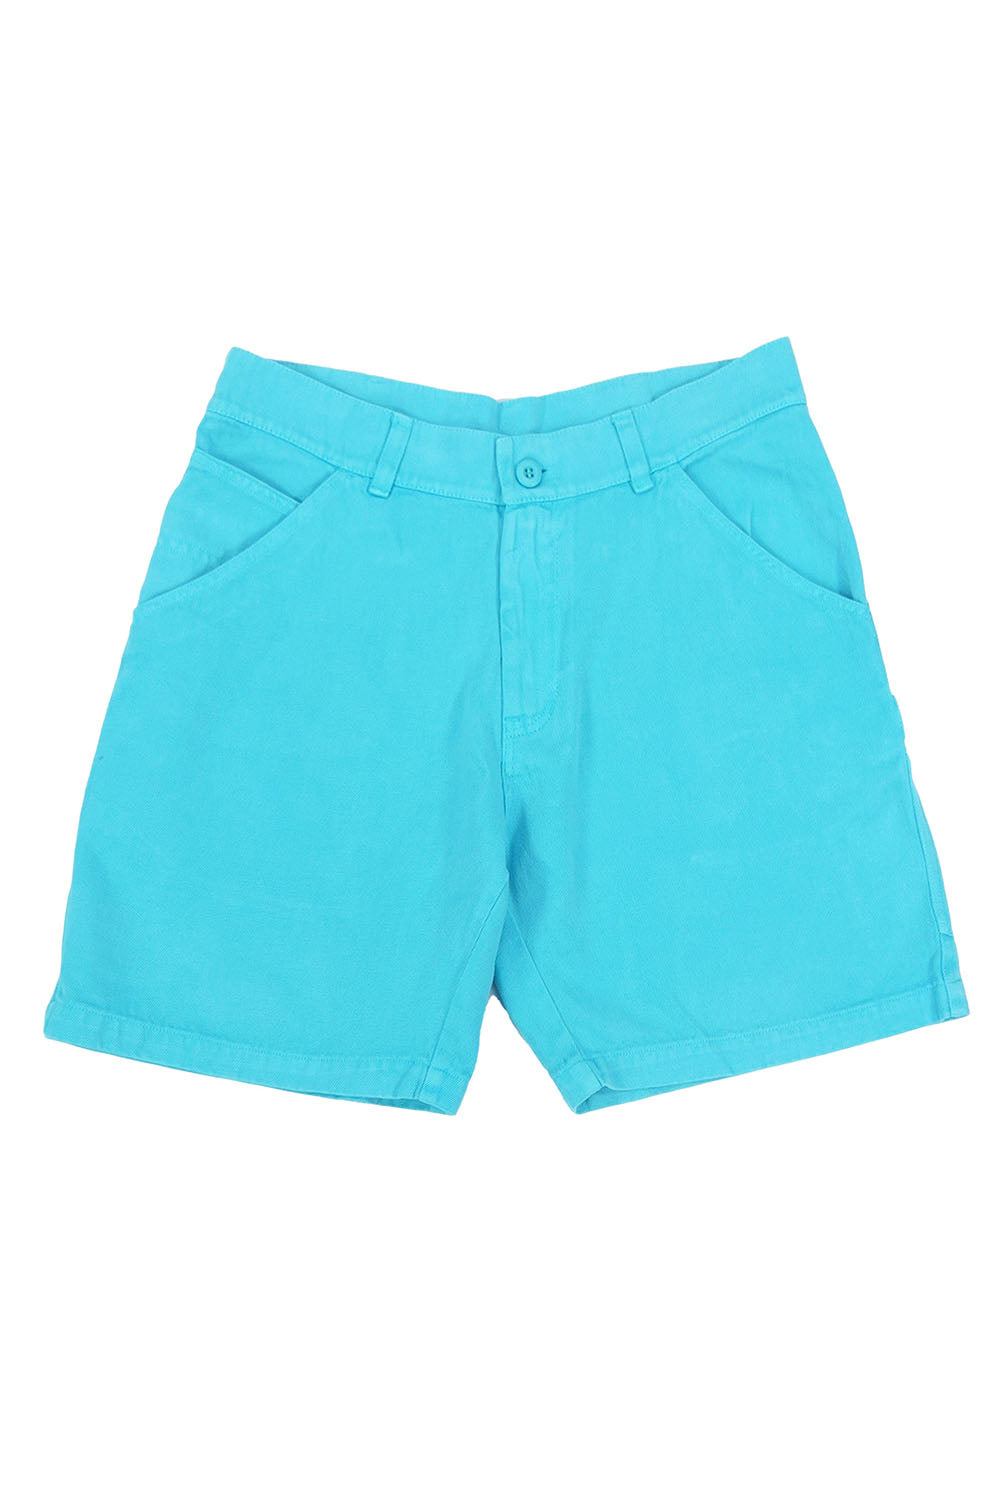 Mountain Short | Jungmaven Hemp Clothing & Accessories / Color: Caribbean Blue